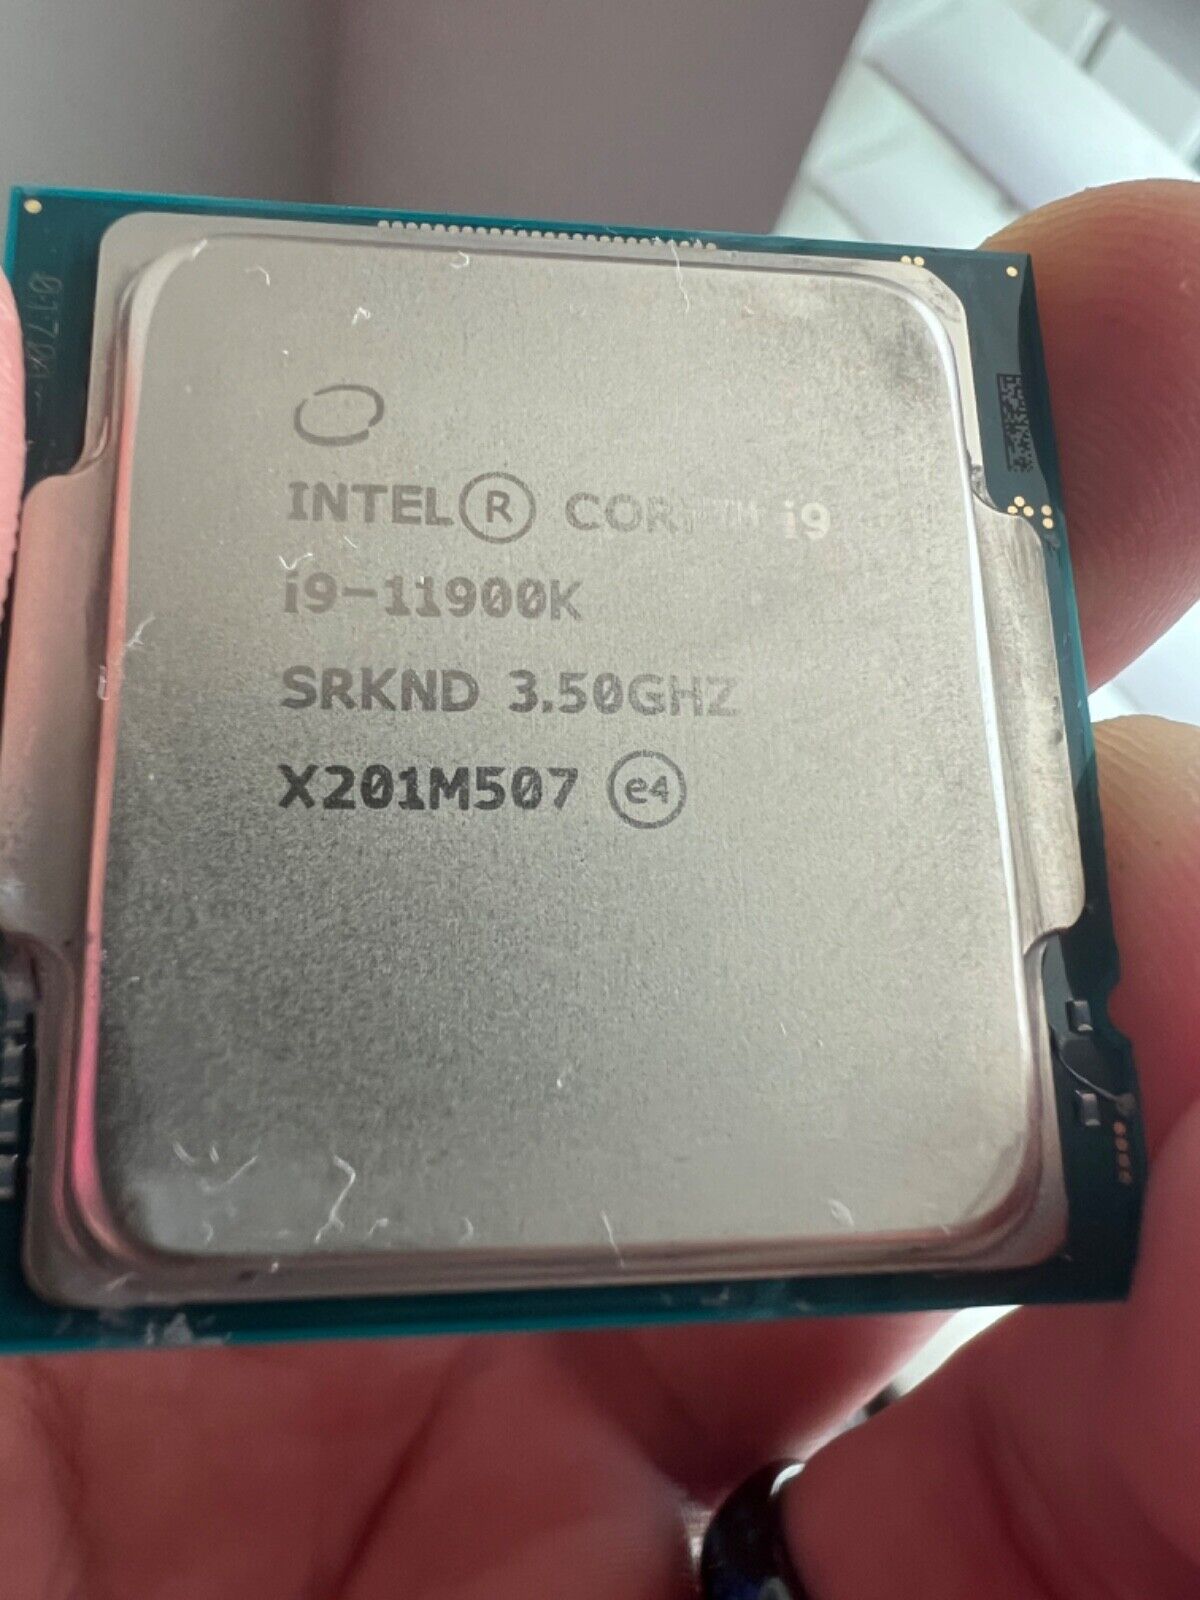 Intel Core i9-11900K Desktop Processor 8 Cores up to 5.3 GHz Unlocked LGA1200